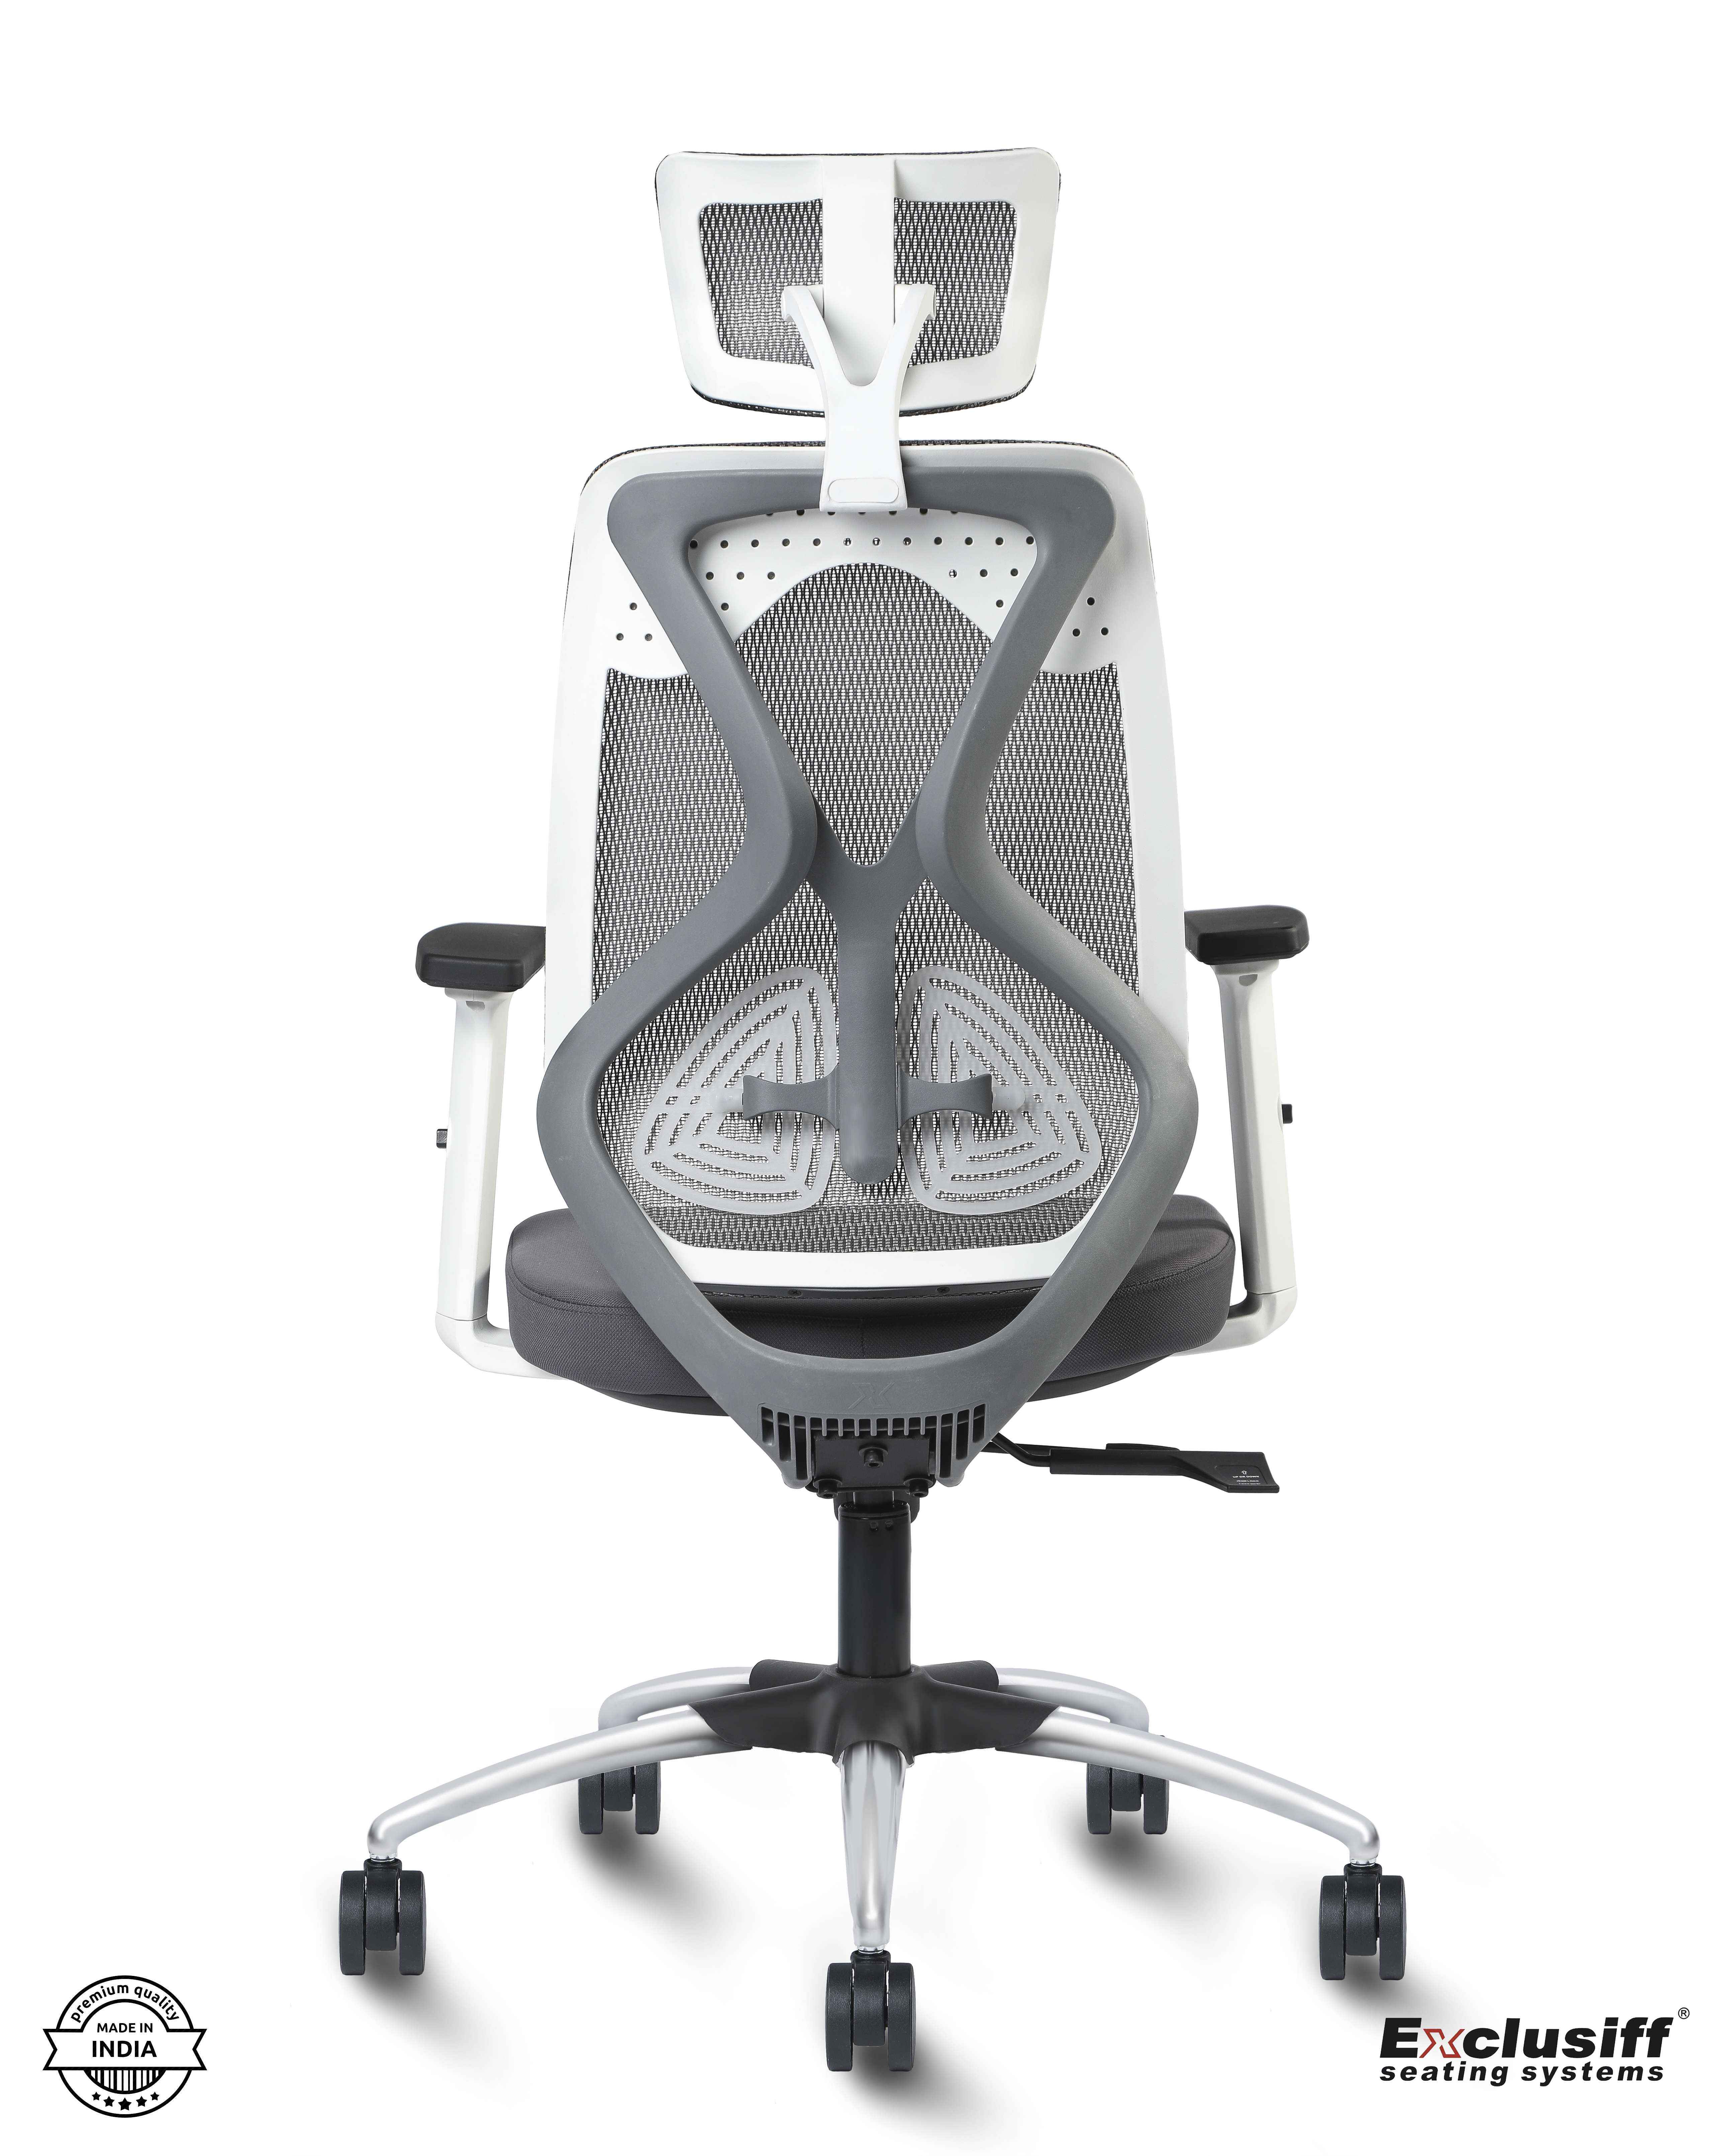 Exclusiff ® Oscar High Back Ergonomic Office Chair 